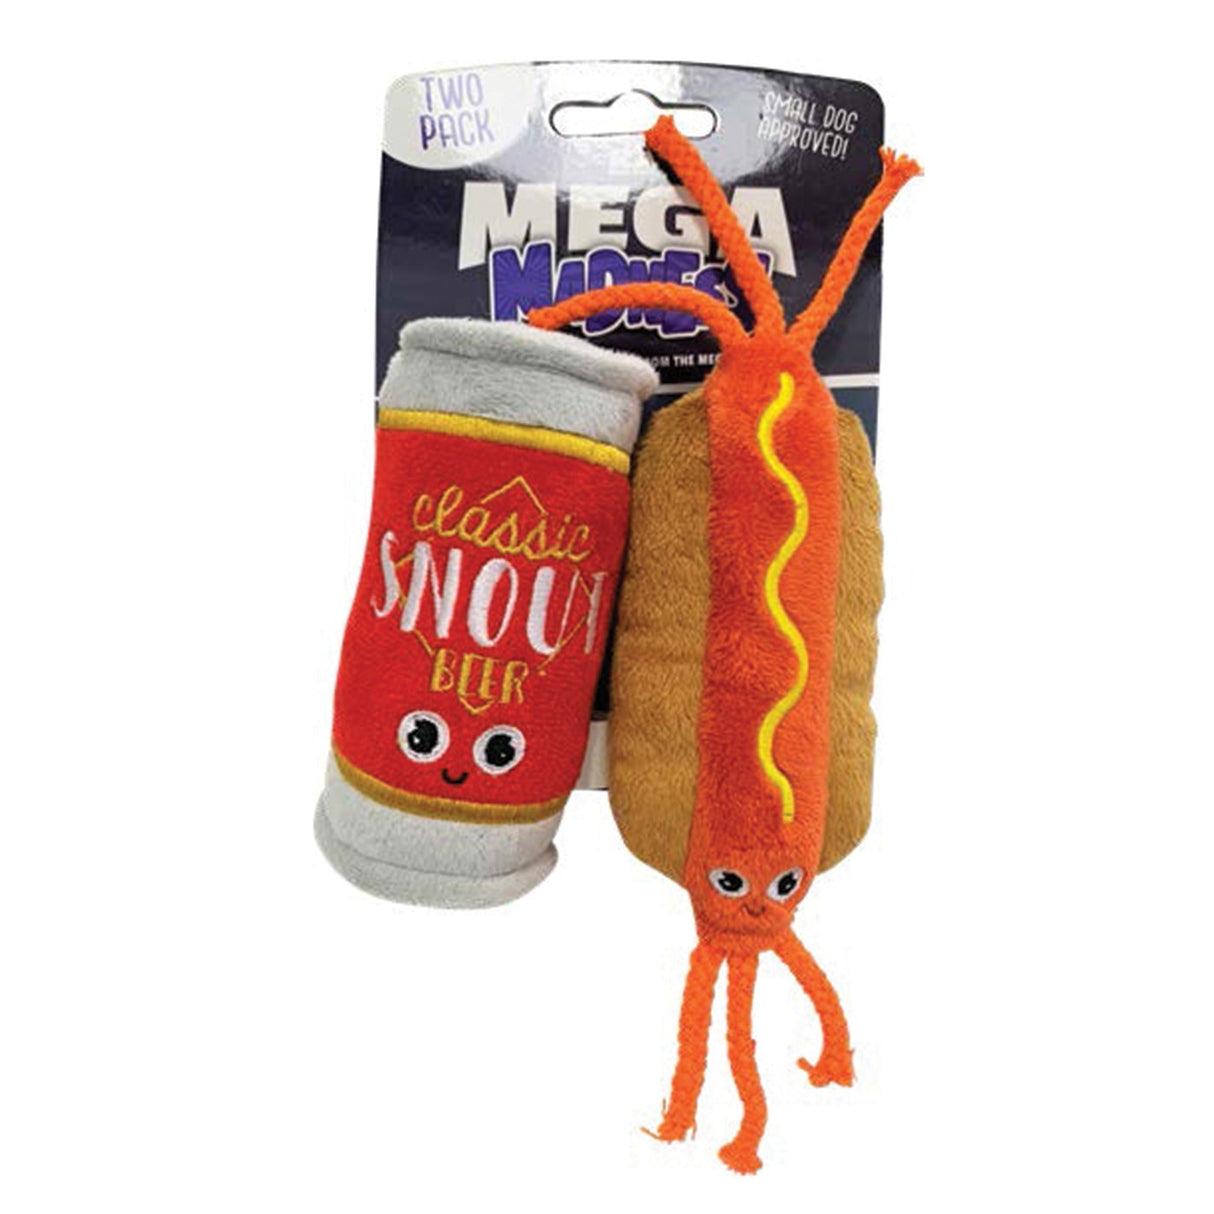 Mega Madness Beer & Hotdog Small Dog Toys - 2 Pack